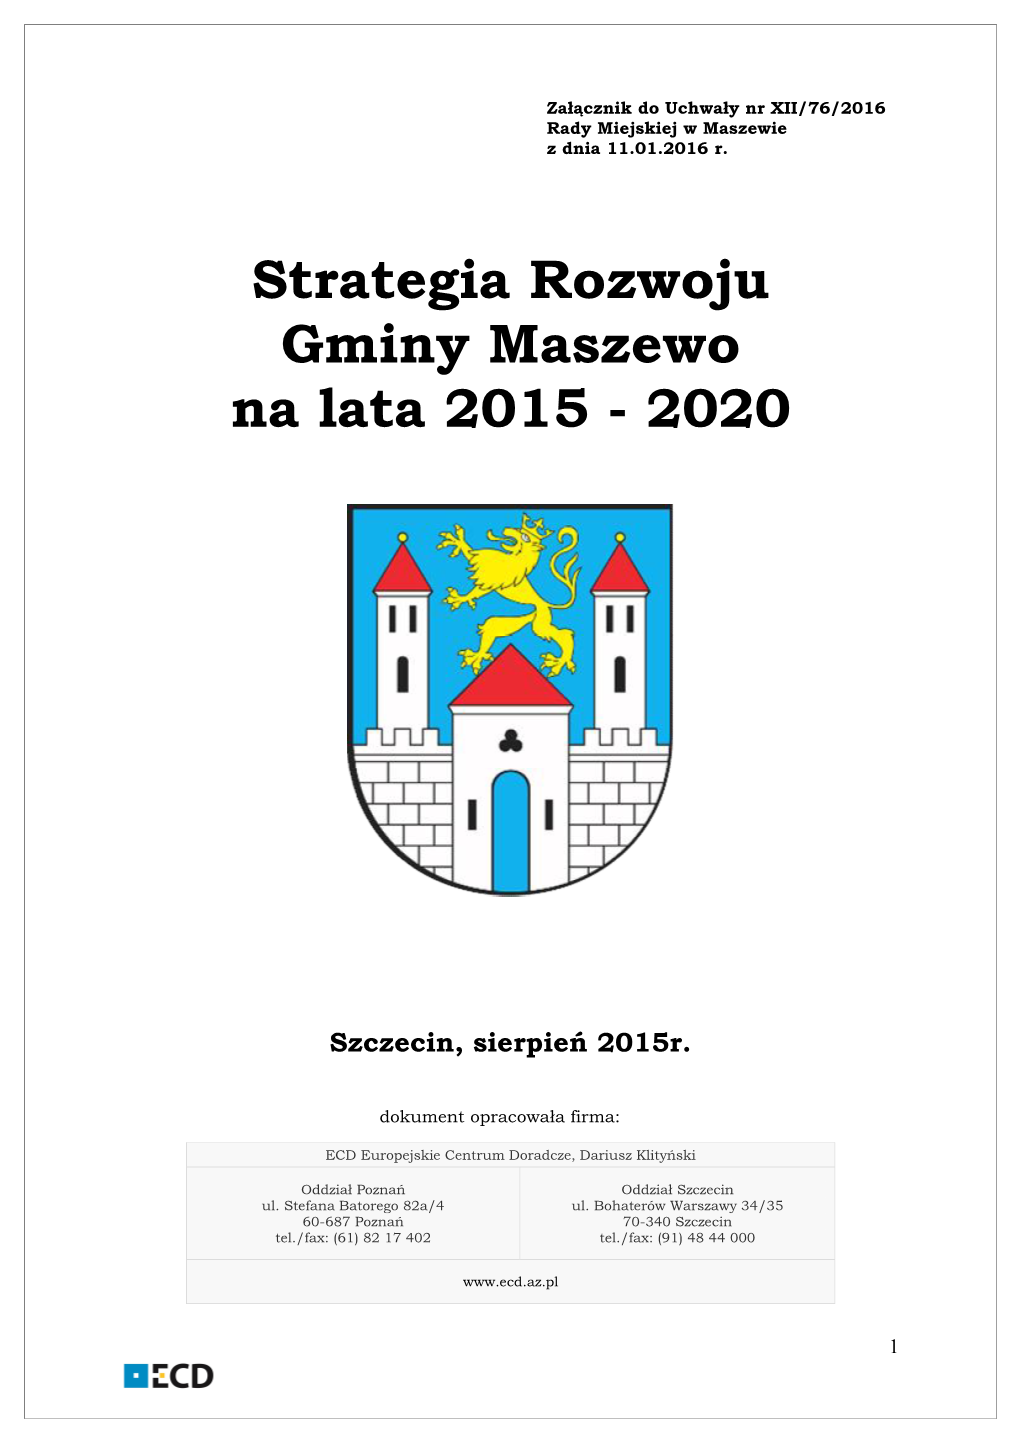 Strategia Rozwoju Gminy Maszewo Na Lata 2015 - 2020